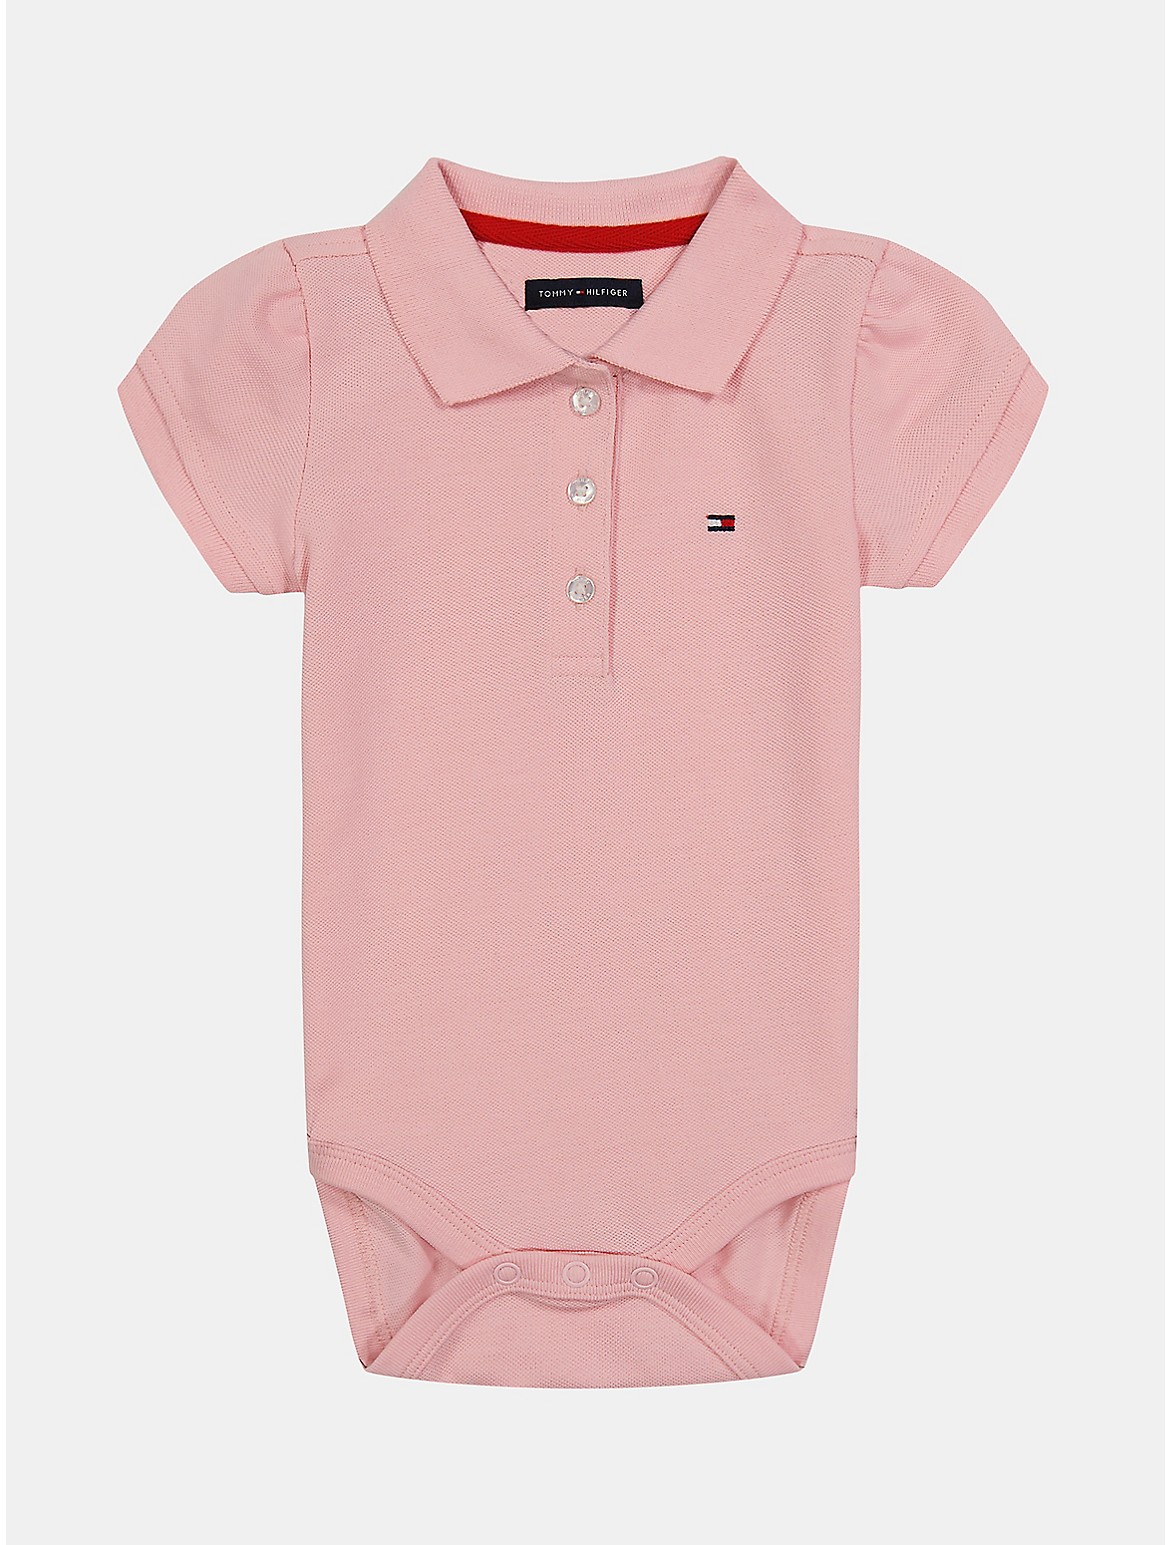 Tommy Hilfiger Girls' Babies' Solid Bodysuit - Pink - 12M